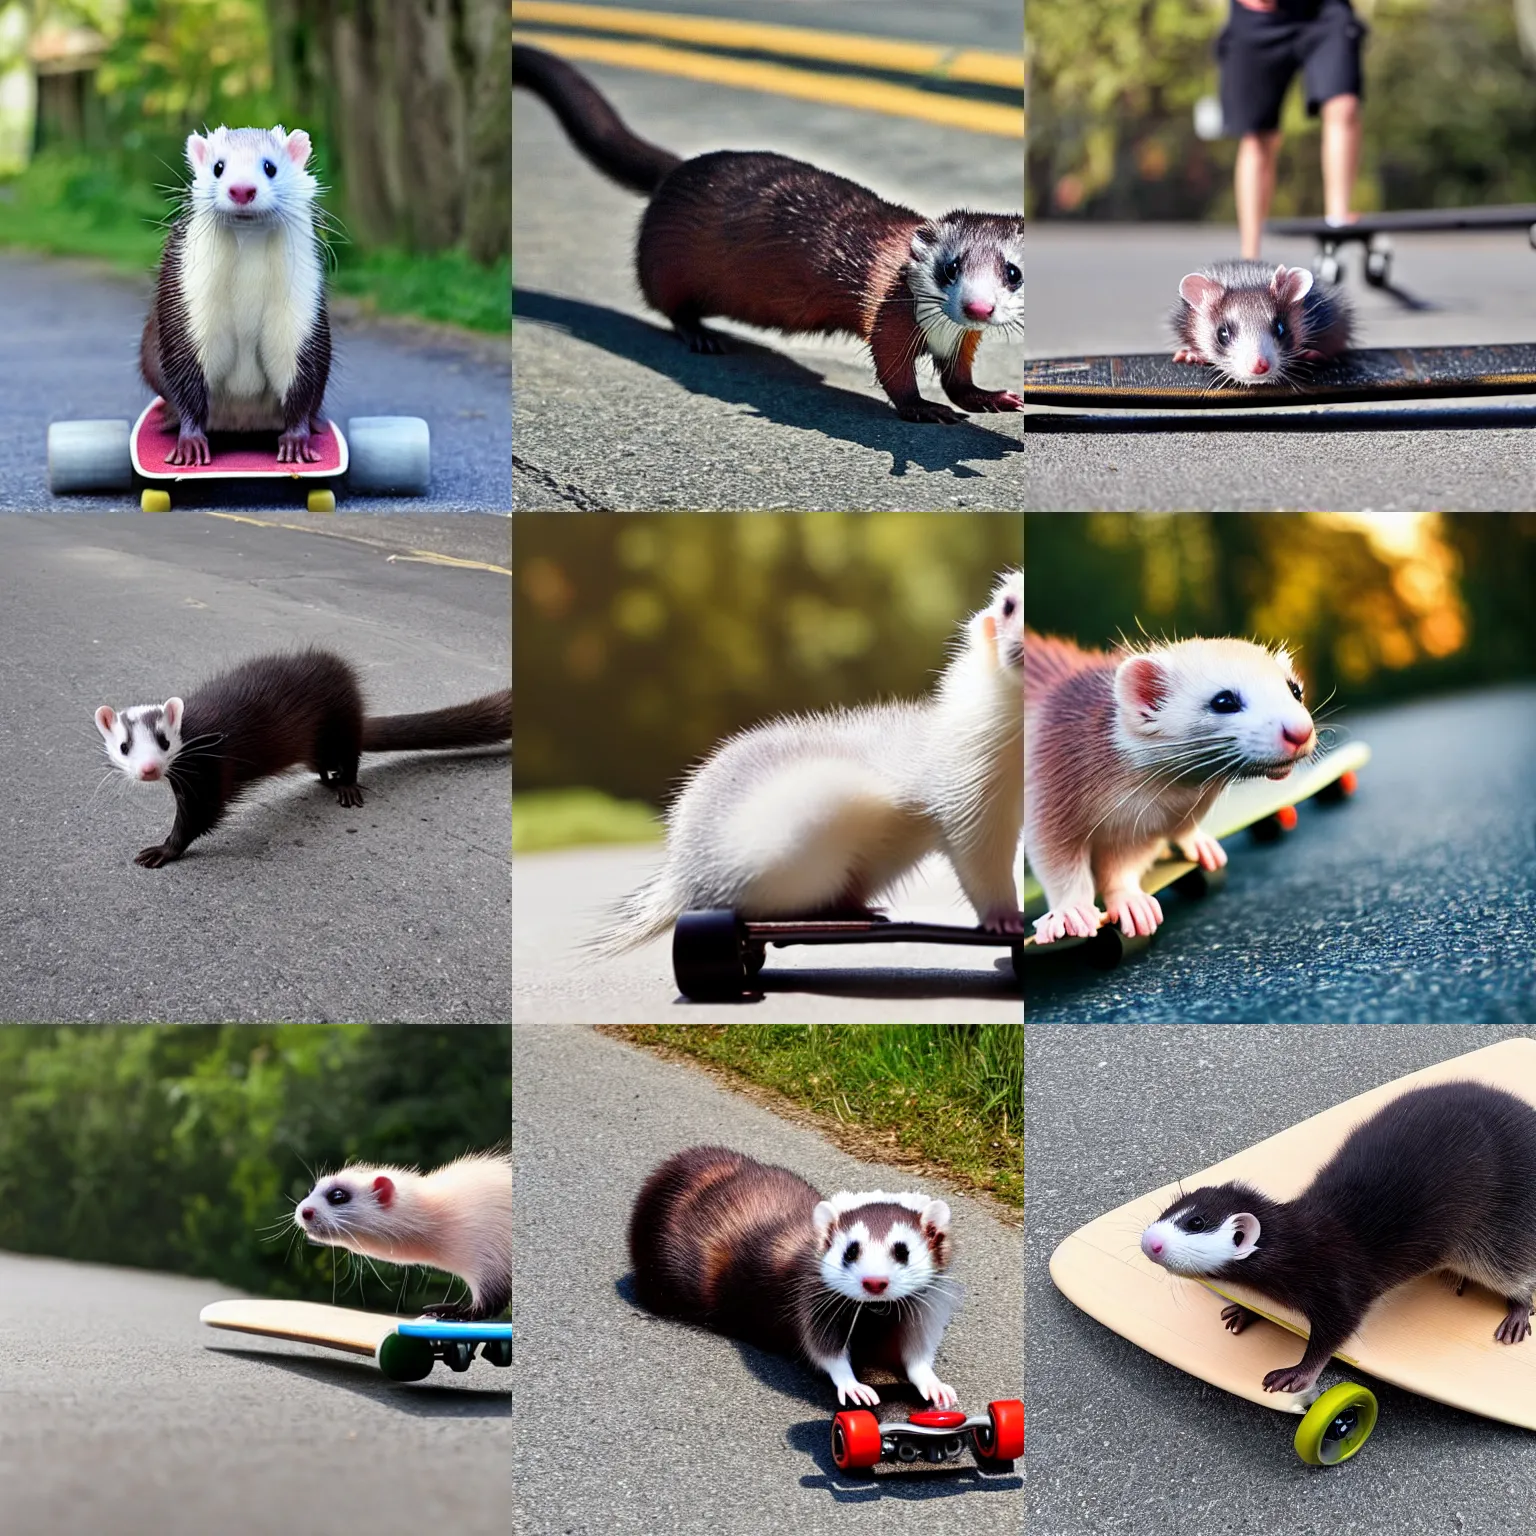 Prompt: a ferret on a longboard